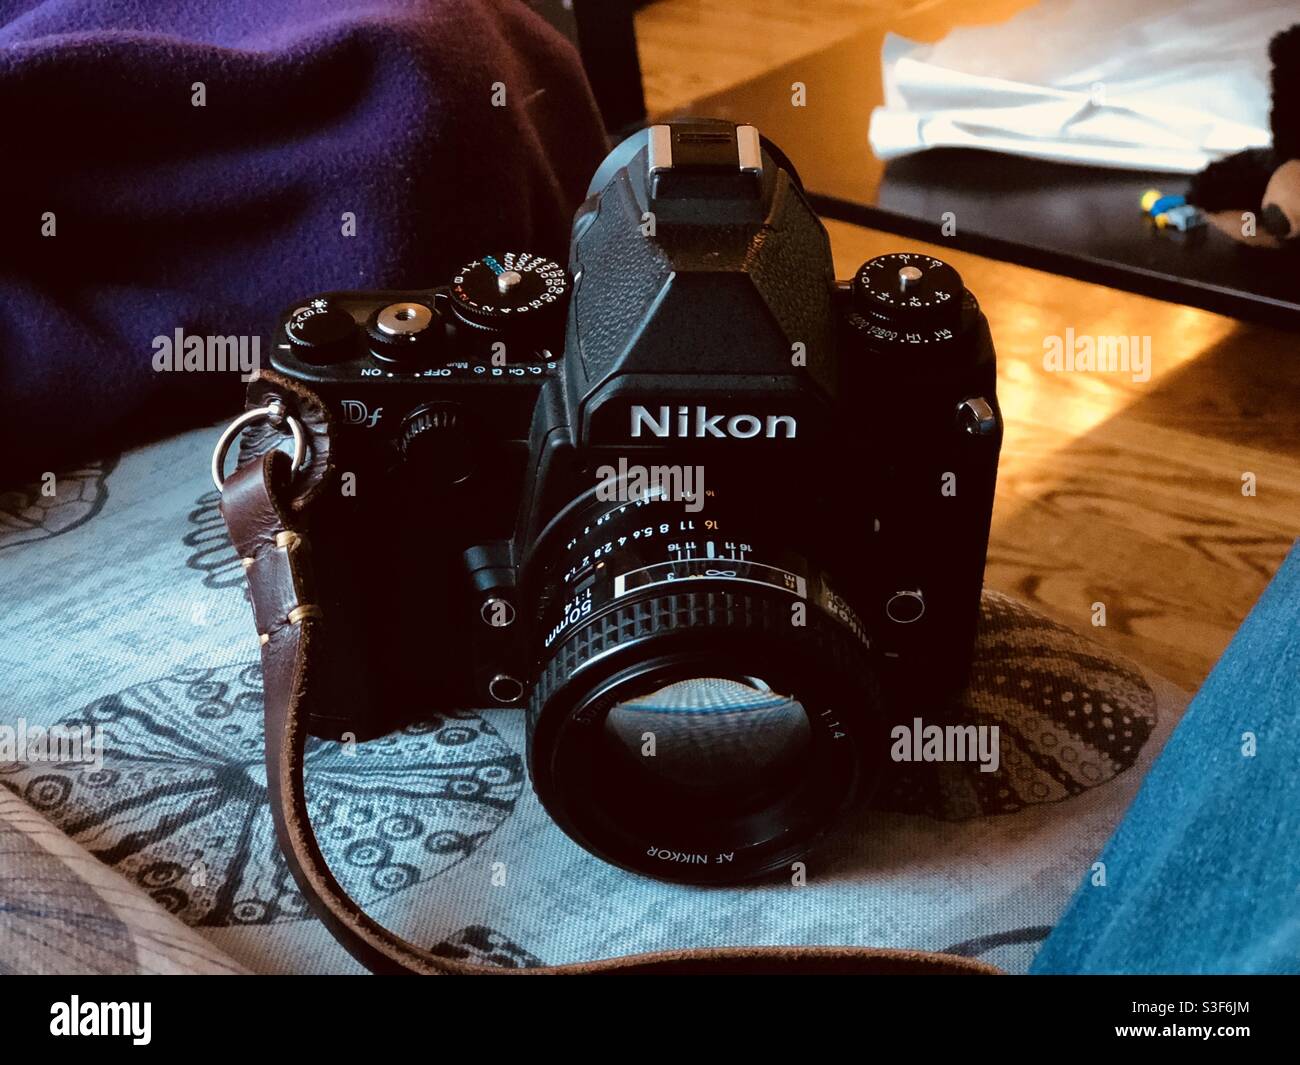 Nikon Df full frame DSLR digital camera with a Nikkor 50mm f1.4 vintage lens on a home background with wooden floor Stock Photo